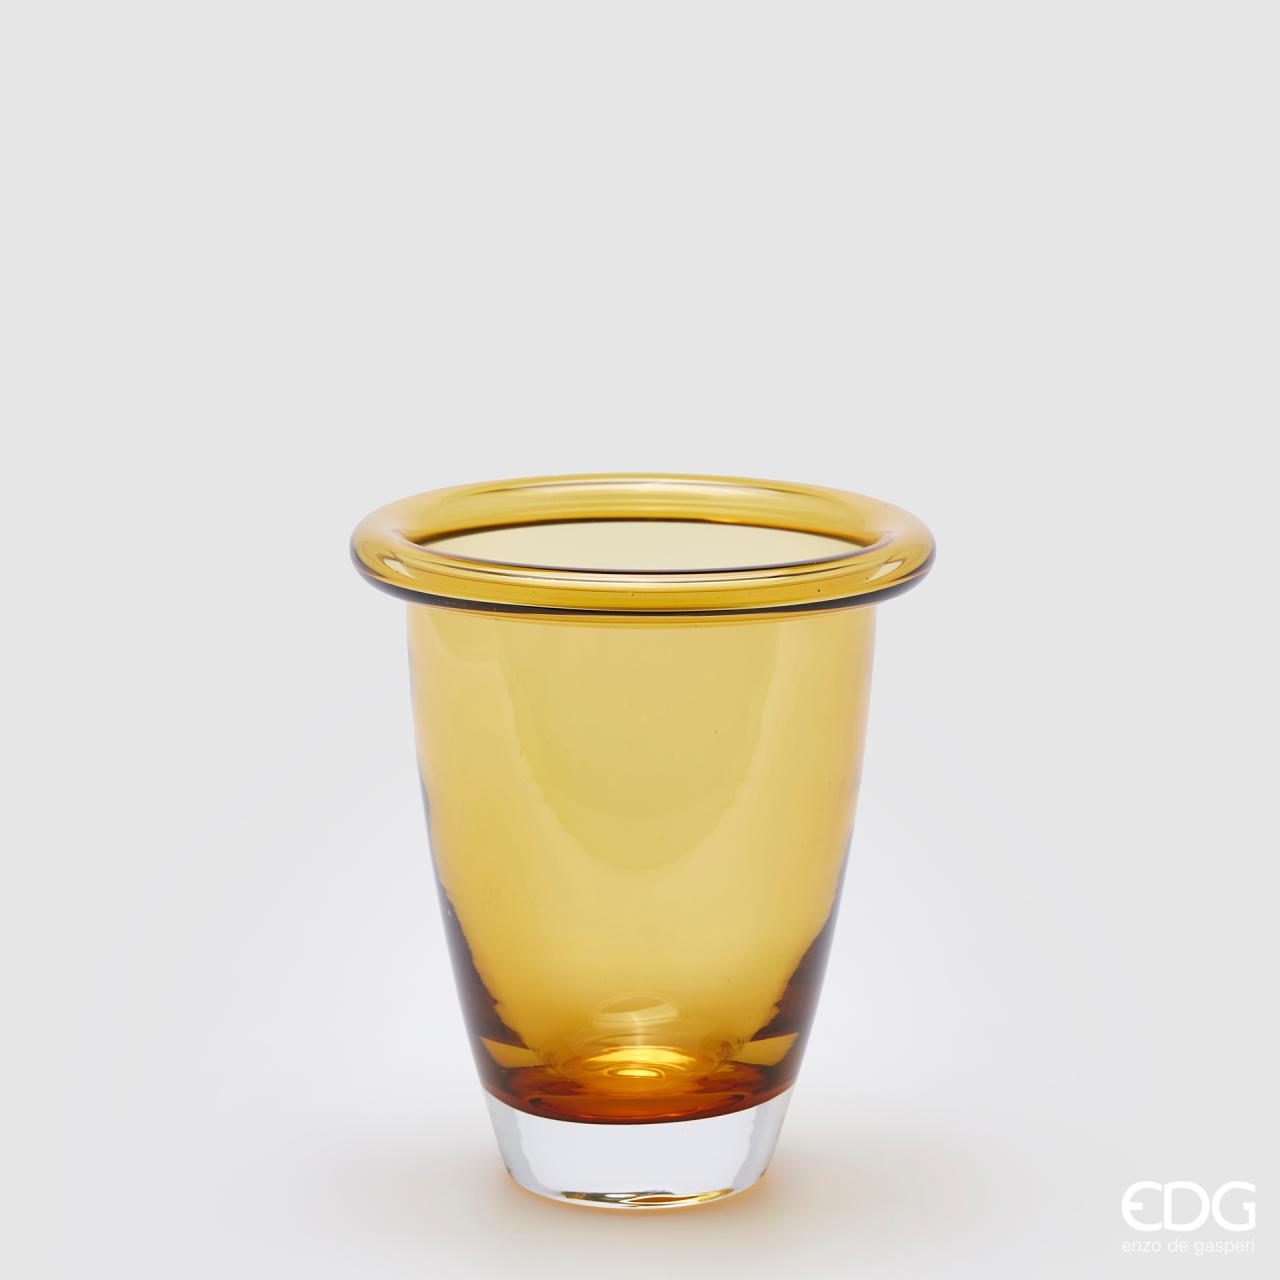 EDG - Vaso in vetro con bordo